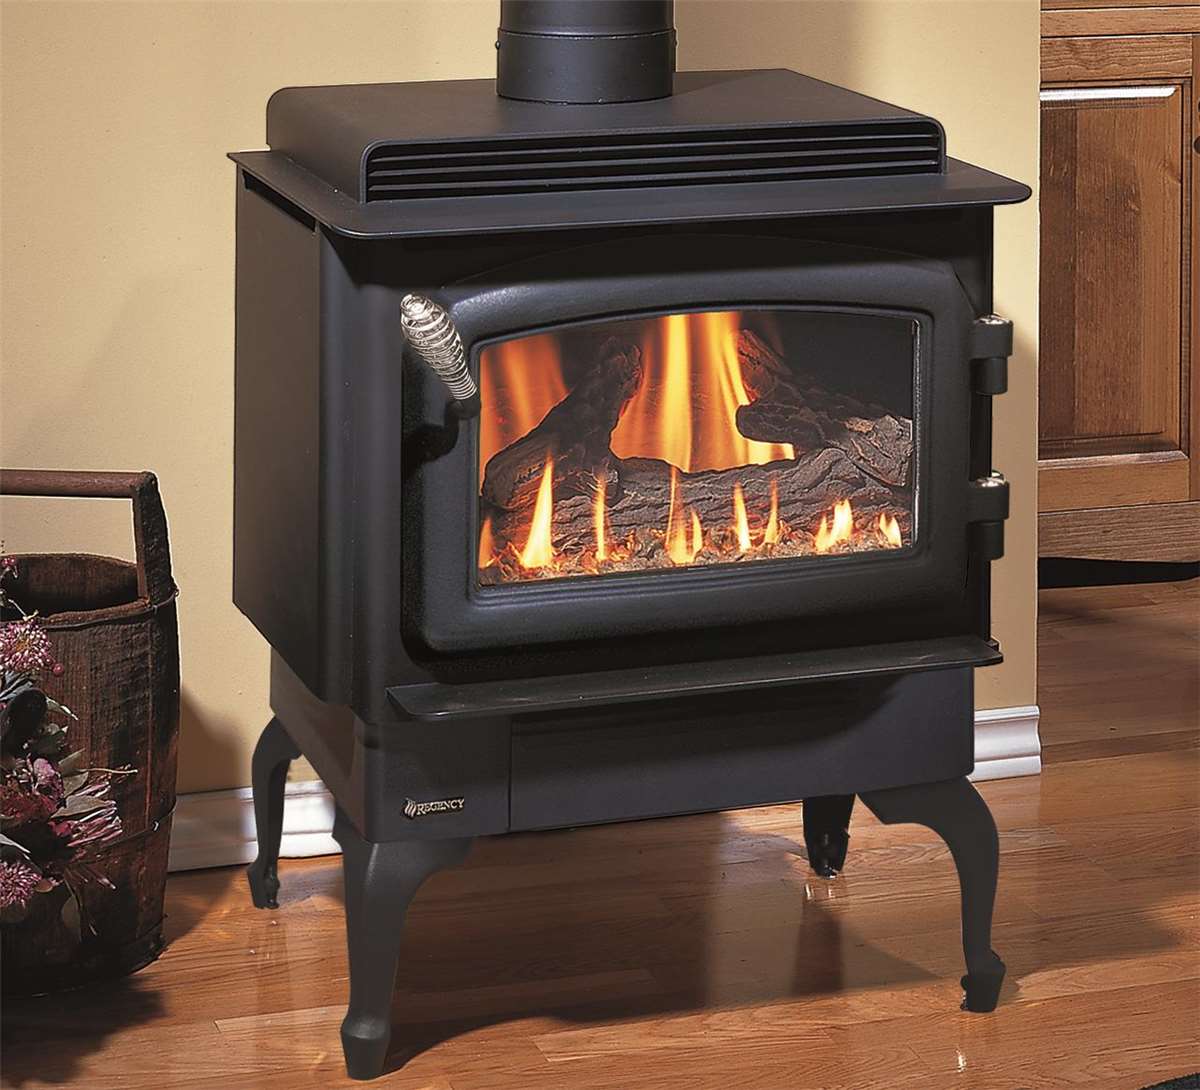 Regency Classic C34 gas stove with black cast iron legs.